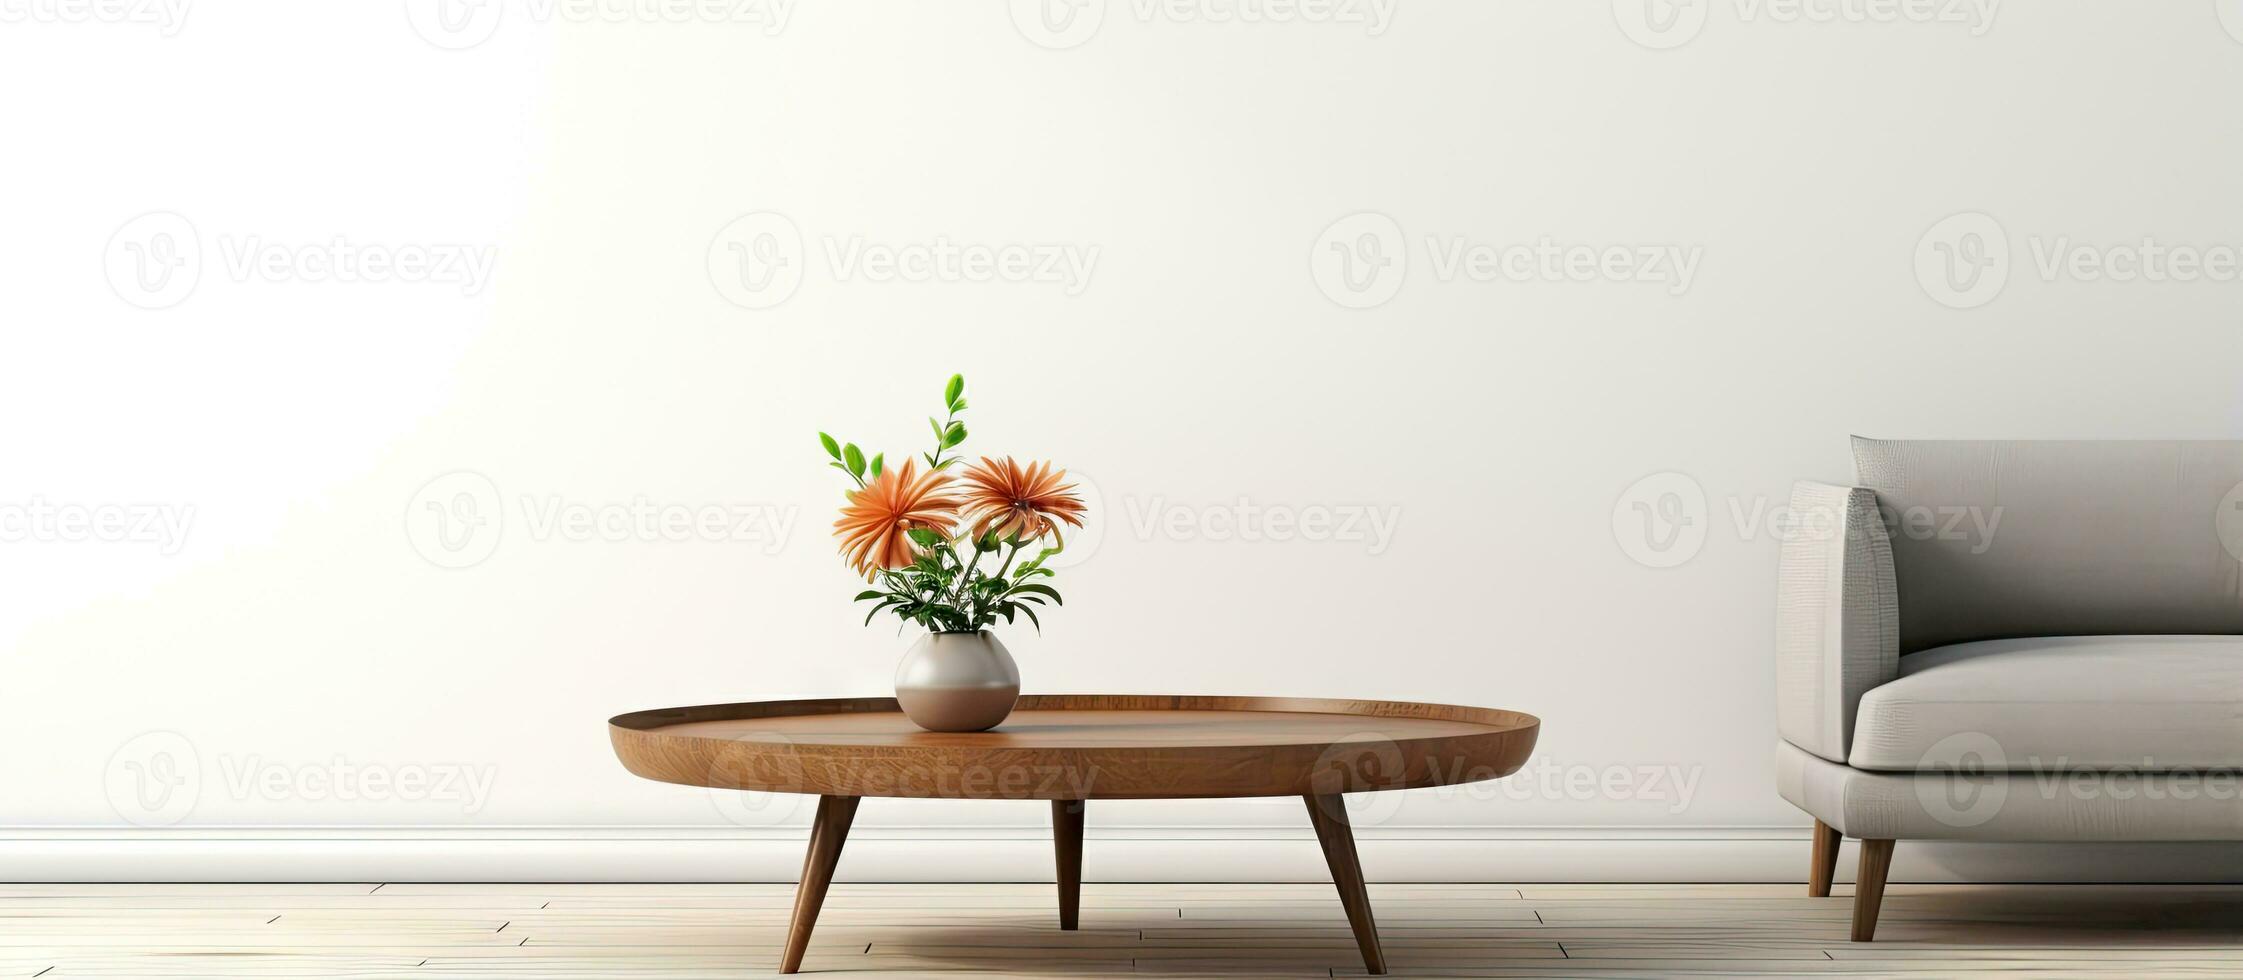 wit achtergrond met koffie tafel foto